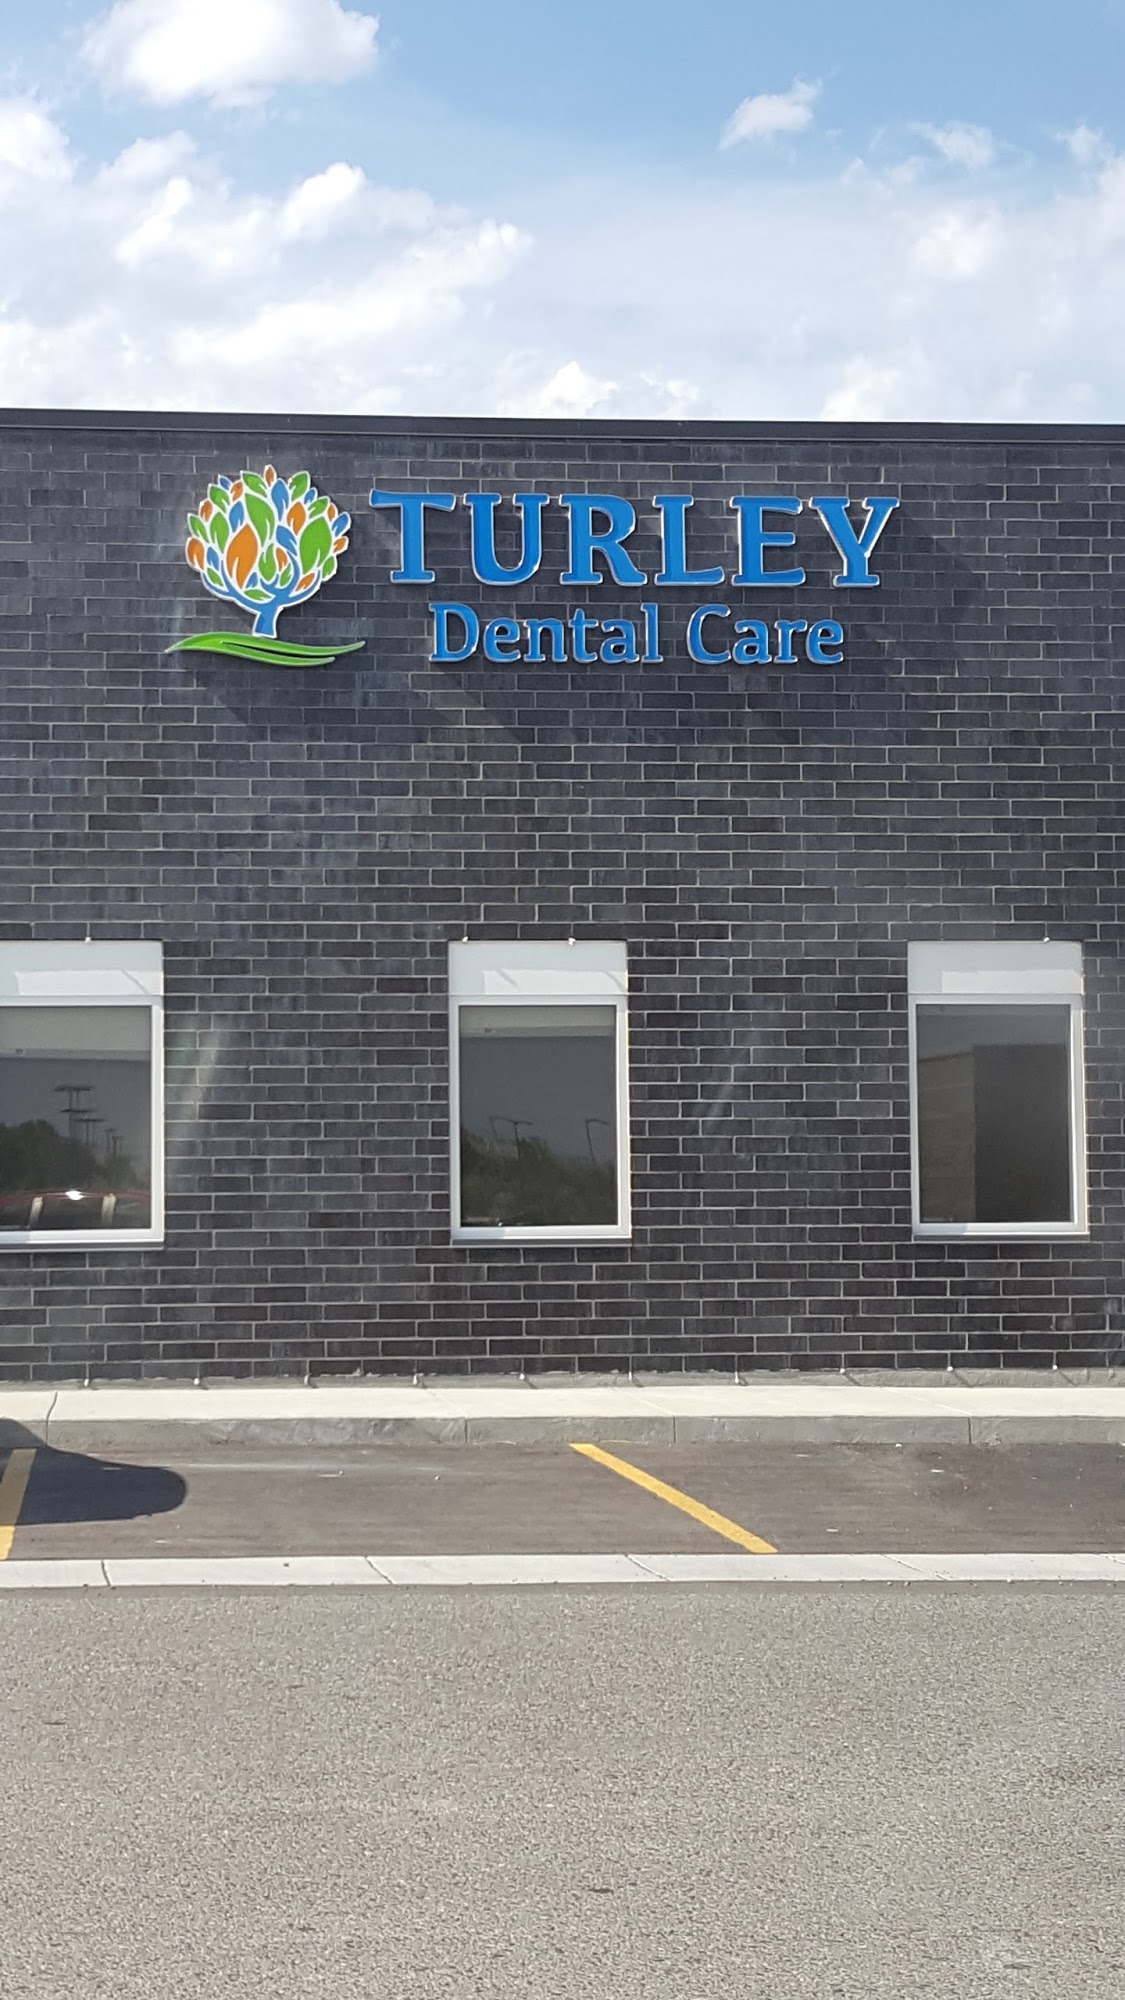 Turley Dental Care